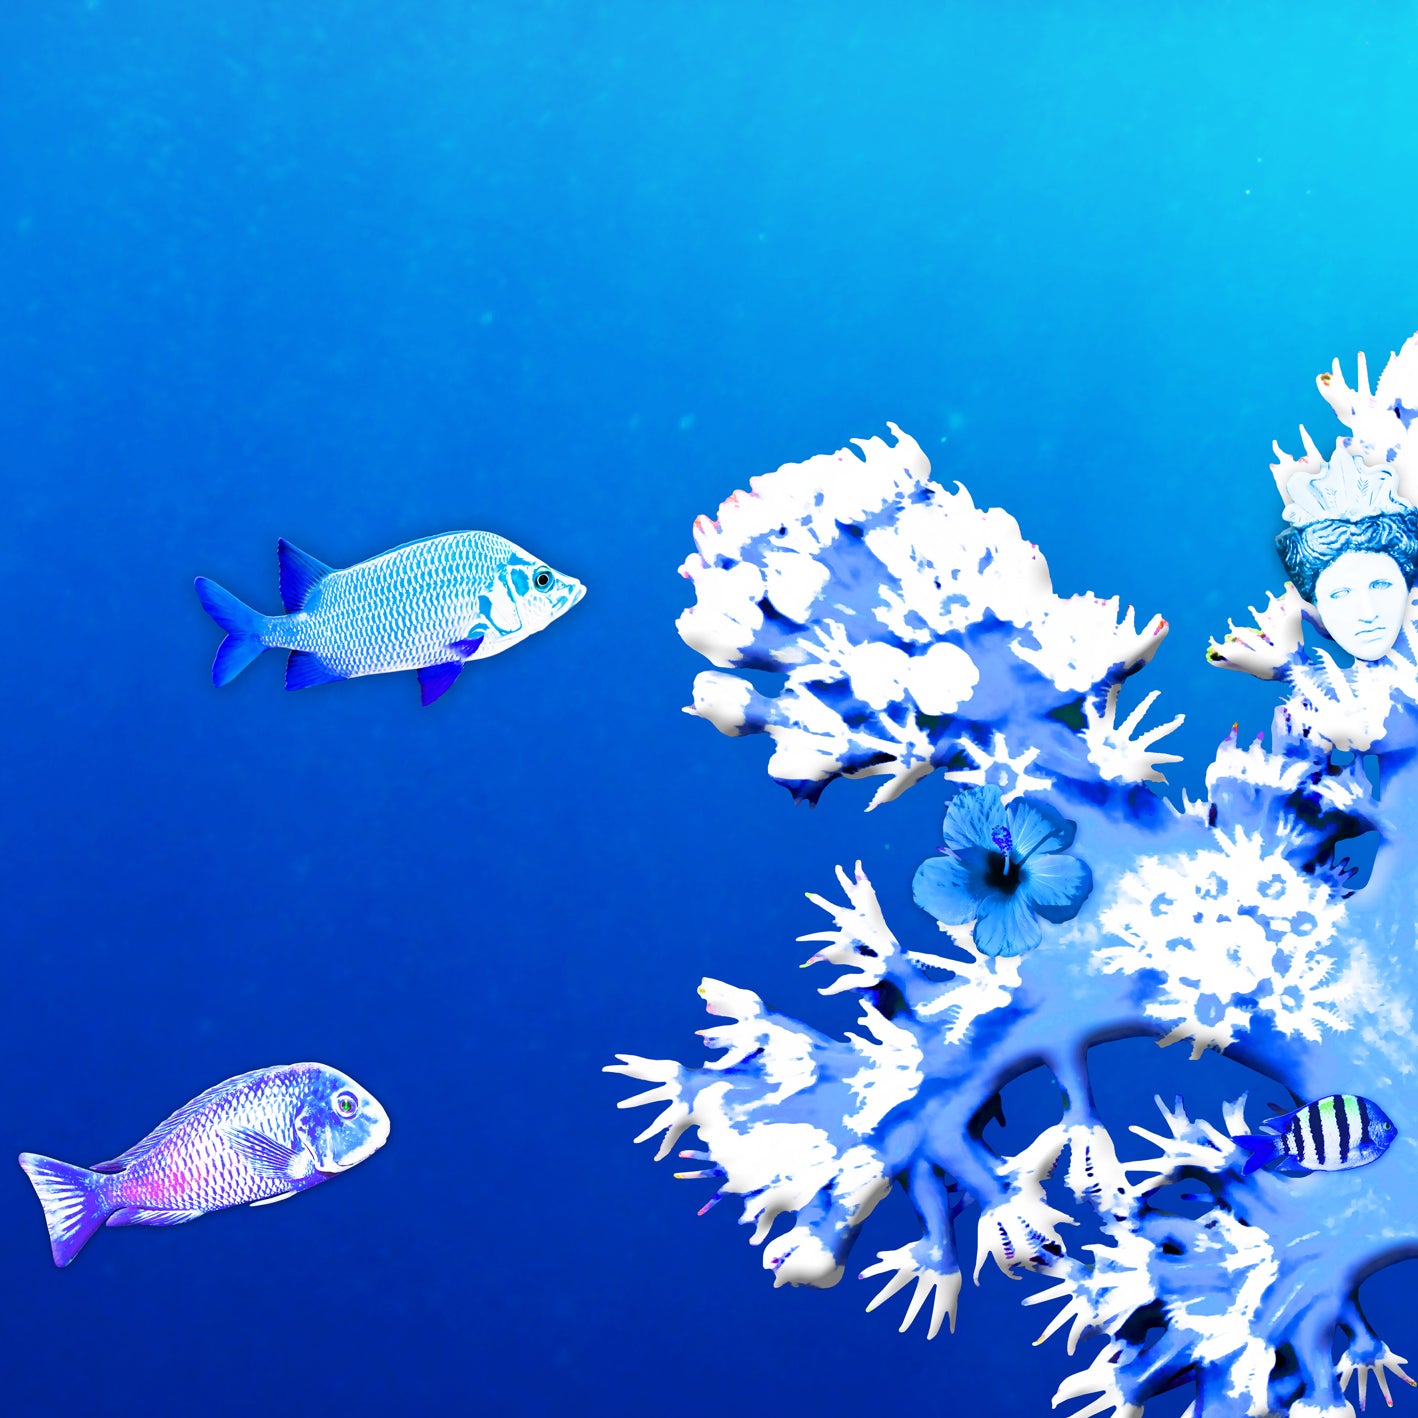 Blue Coral Reef - UNDERWATER ARTWORK - Edition of 7